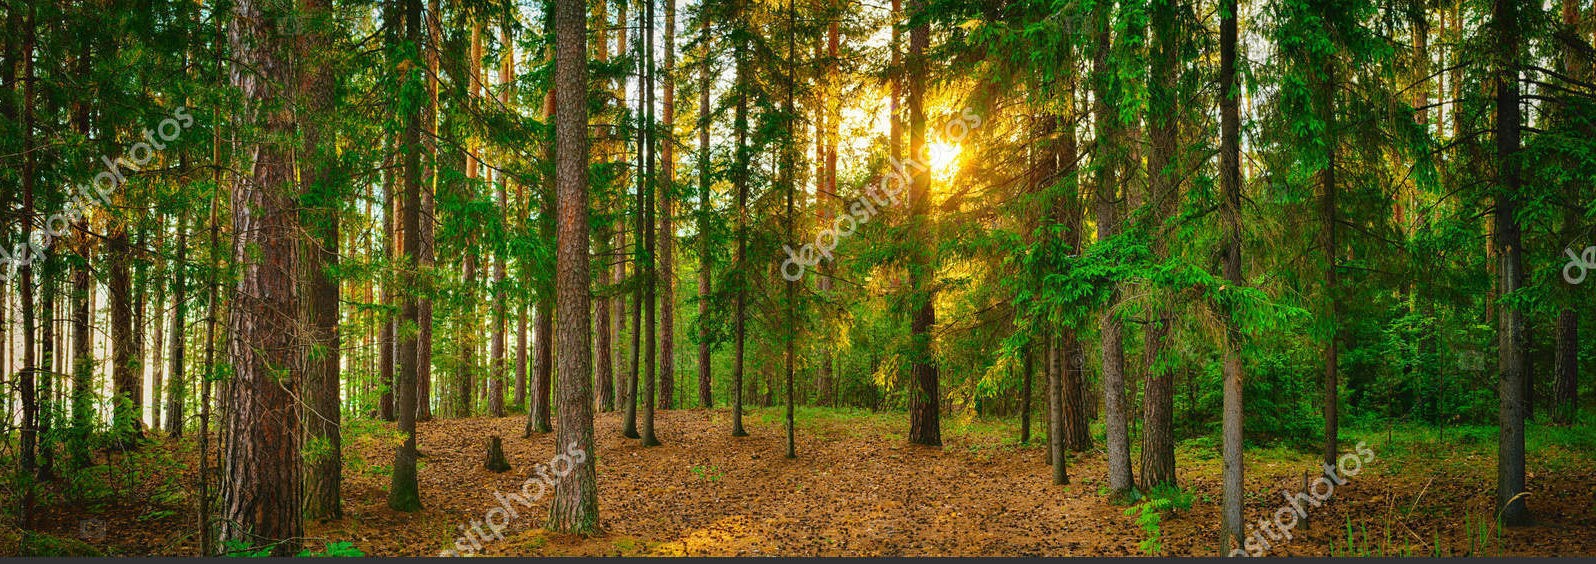 Панорама леса с солнечным светом